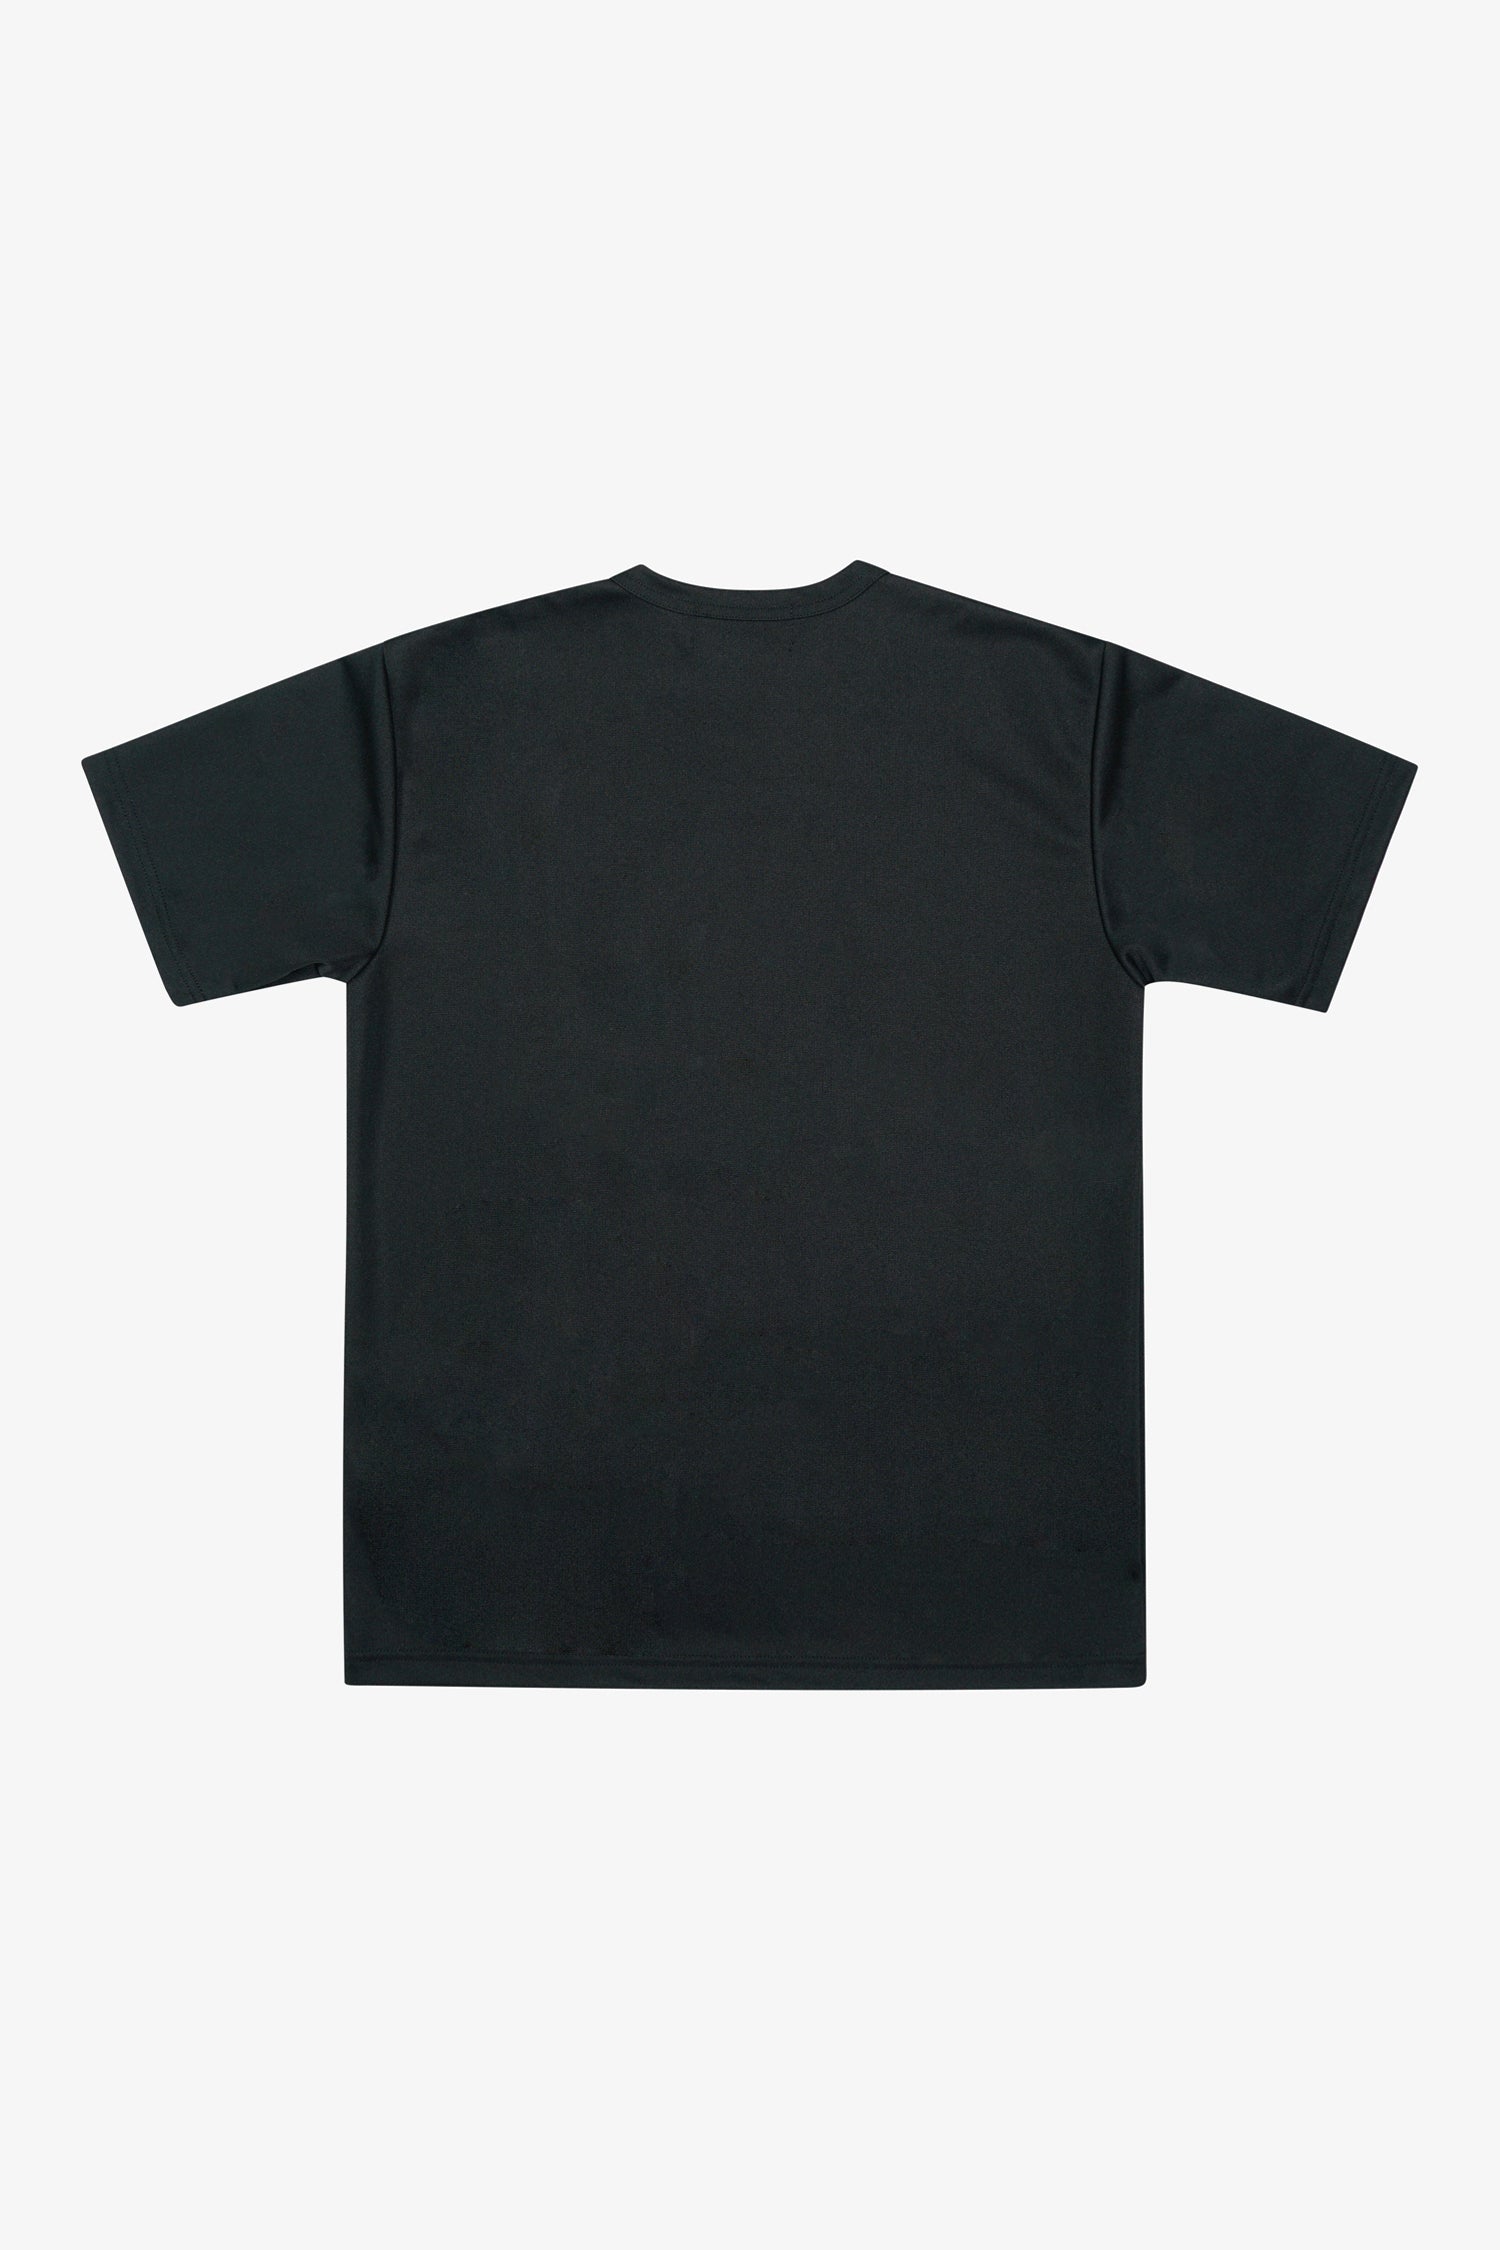 Selectshop FRAME - COMME DES GARÇONS BLACK Nike Freedom T-Shirt T-Shirts Dubai